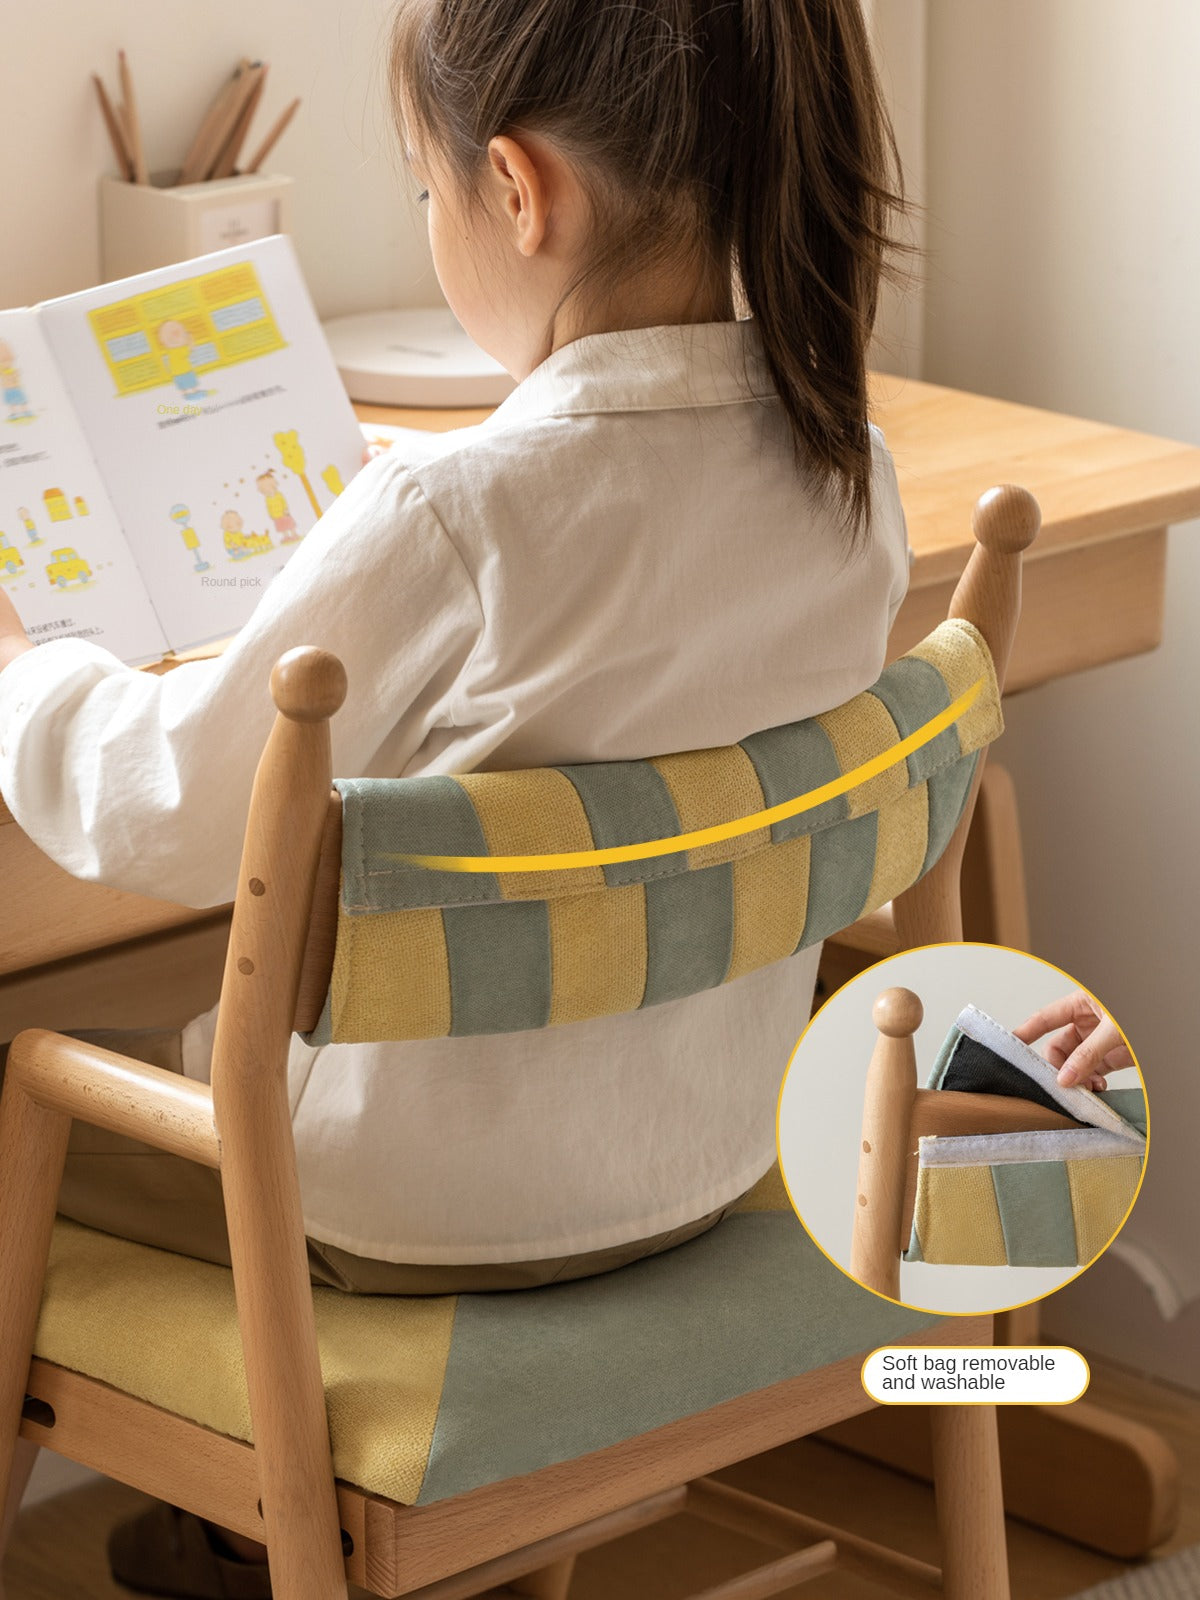 Children's chair height adjustable beech solid wood"